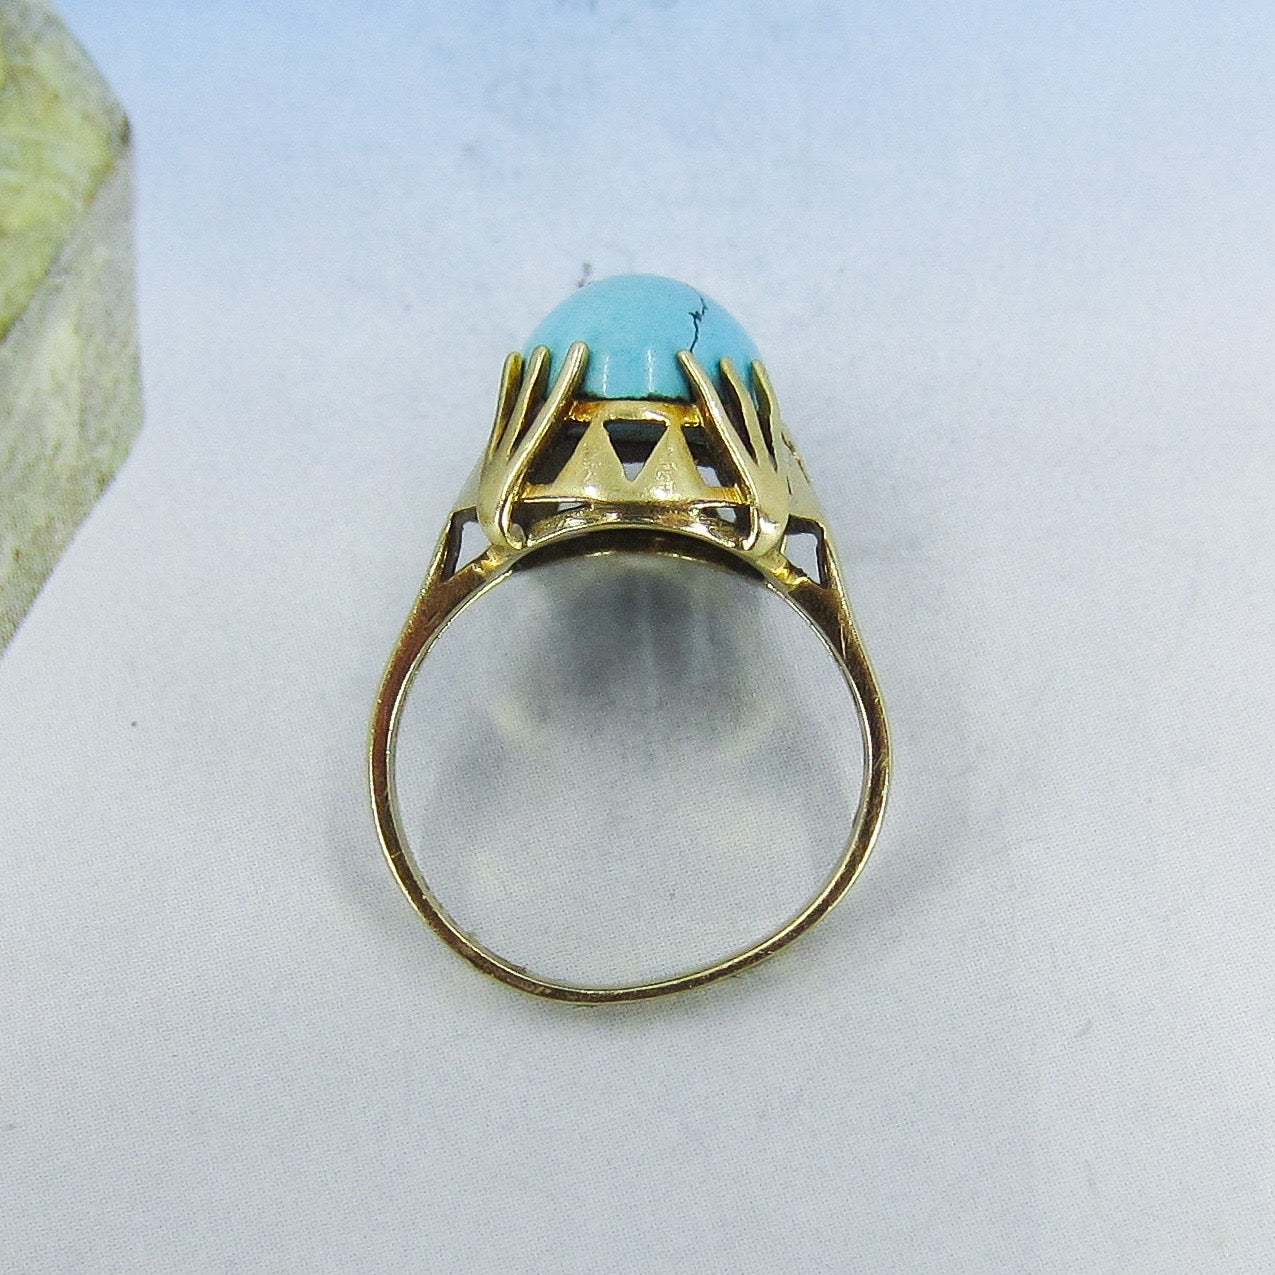 Vintage Egyptian Revival Turquoise Ring 14k c. 1970